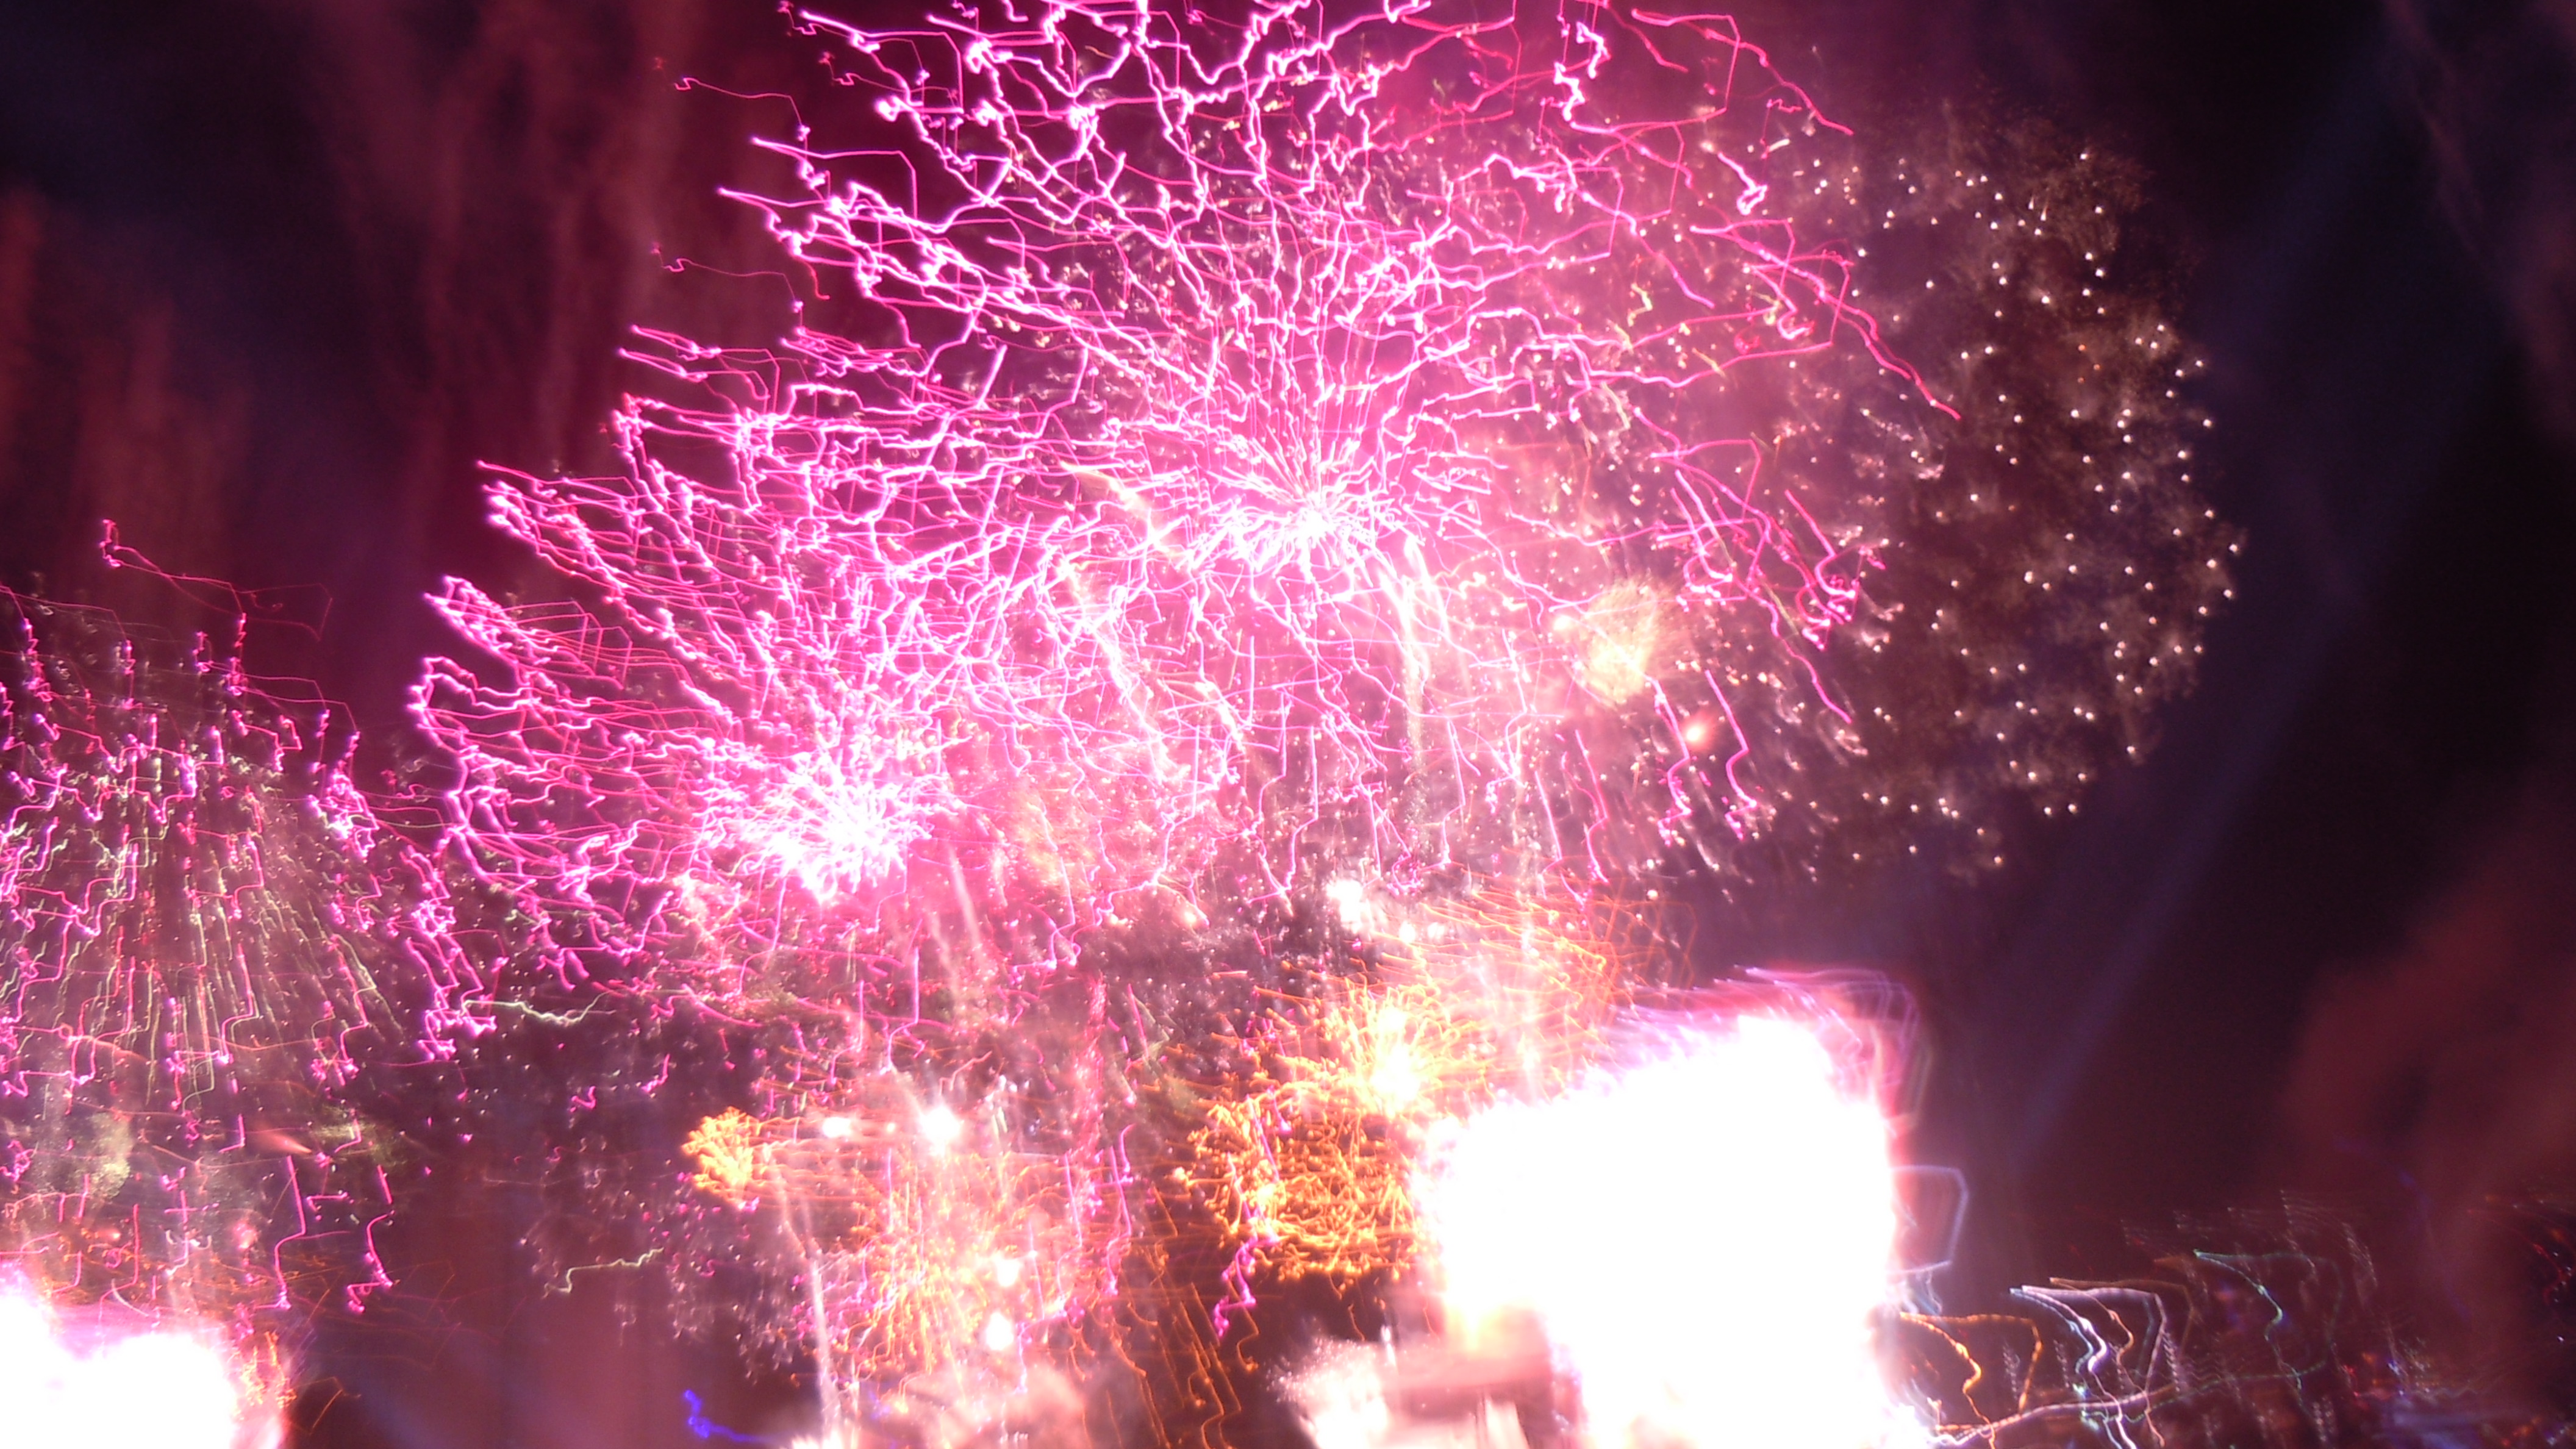 Dubai Fireworks